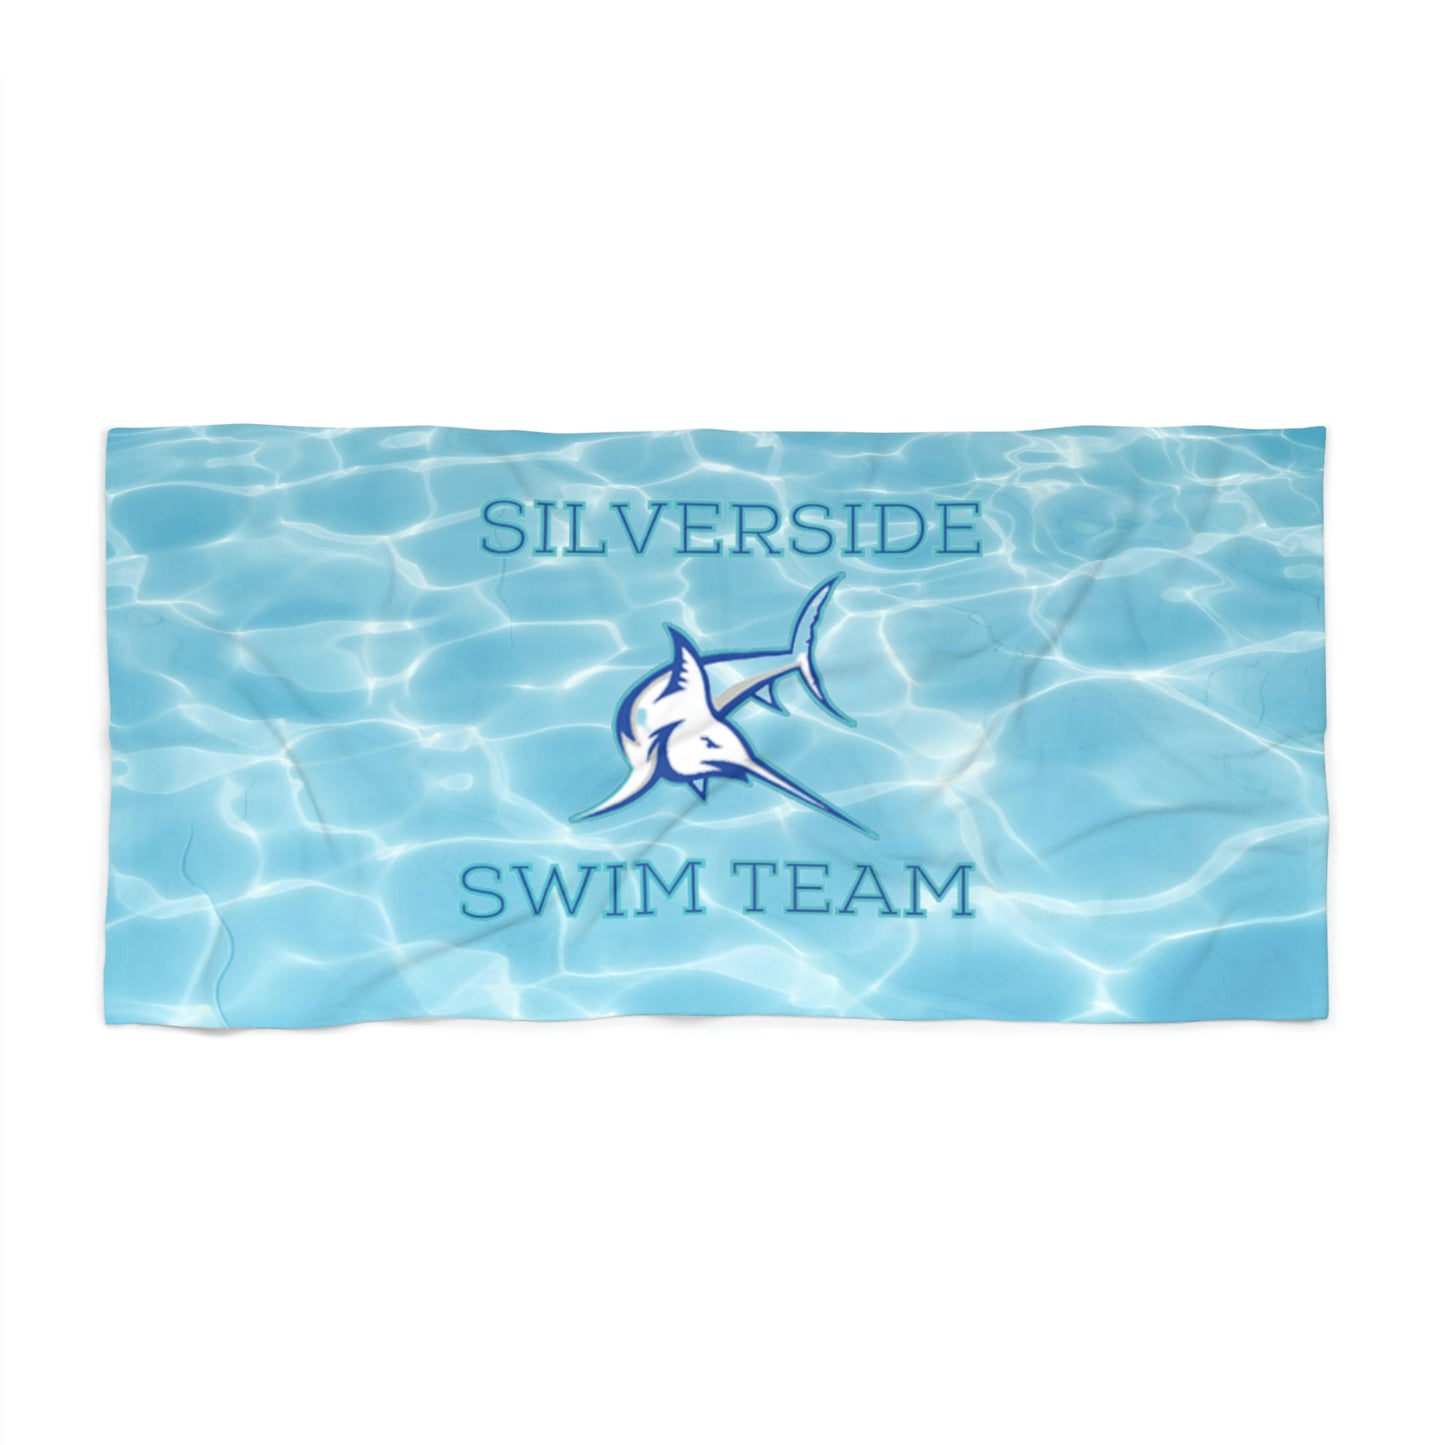 Silverside Swim Team 2 Pool Towel